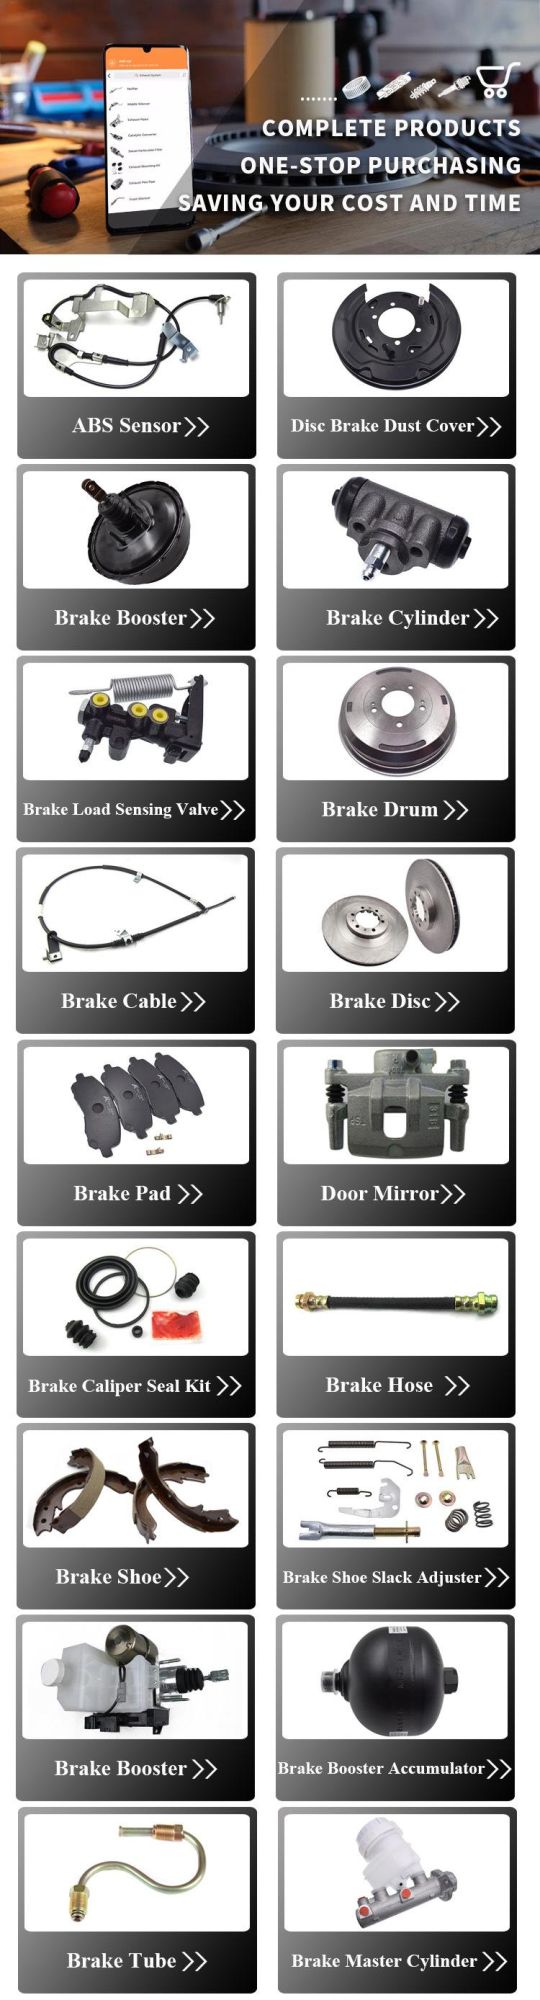 Kowze Car Parts Brake System Auto Spare Parts Brake Auto Parts for Mitsubishi L200 Pajero MPV Nissan Toyota Ford Isuzu Mazda Chevrolet